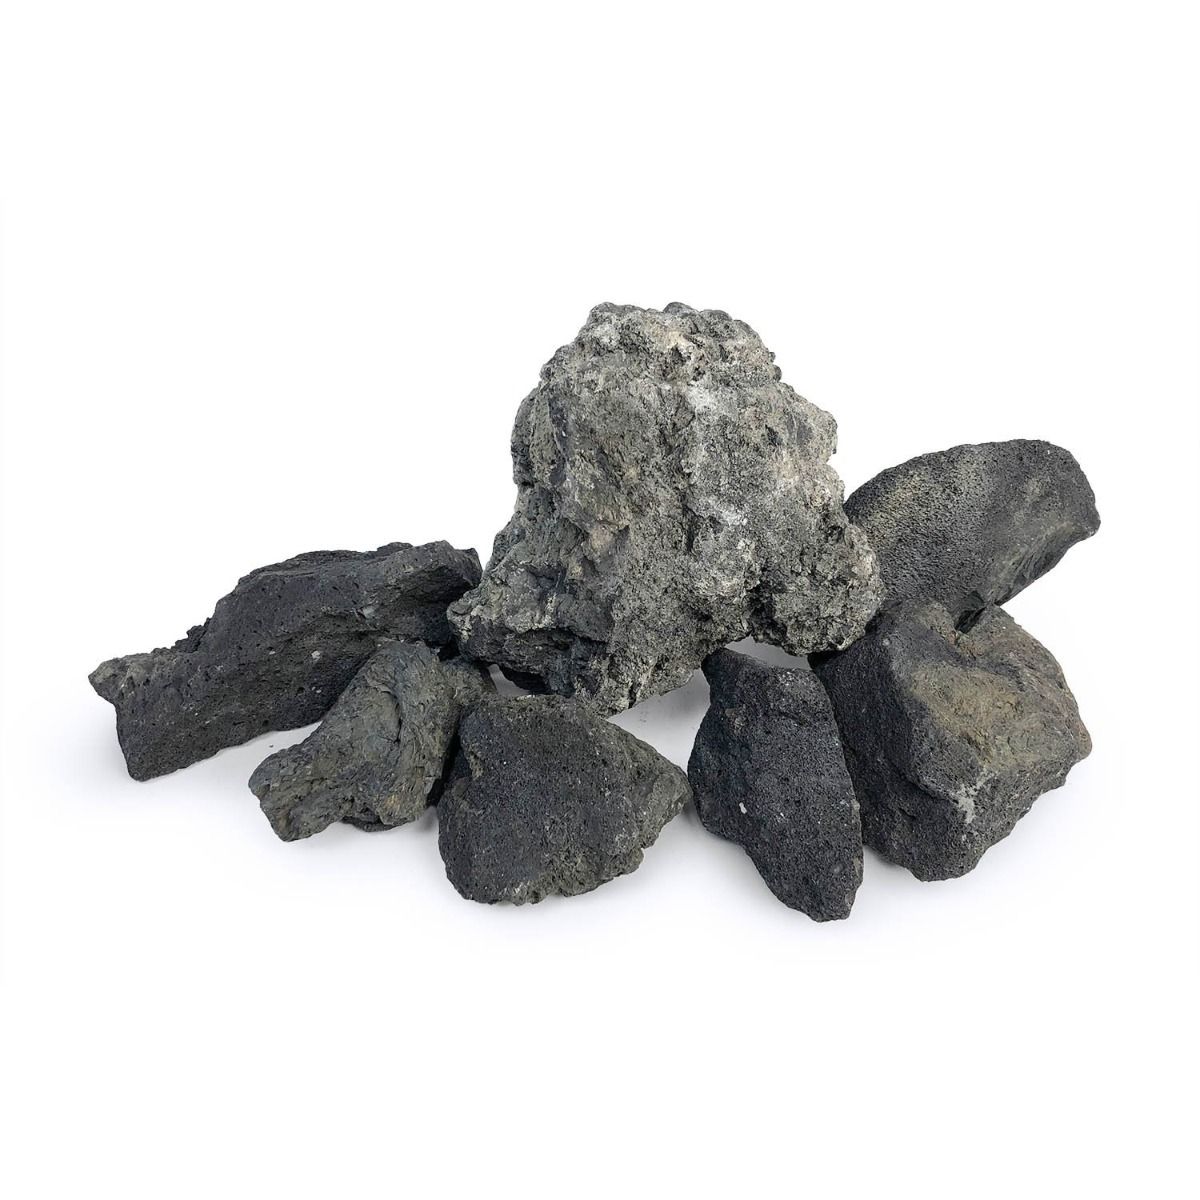 SR Aquaristik Black Lava Rock per pound